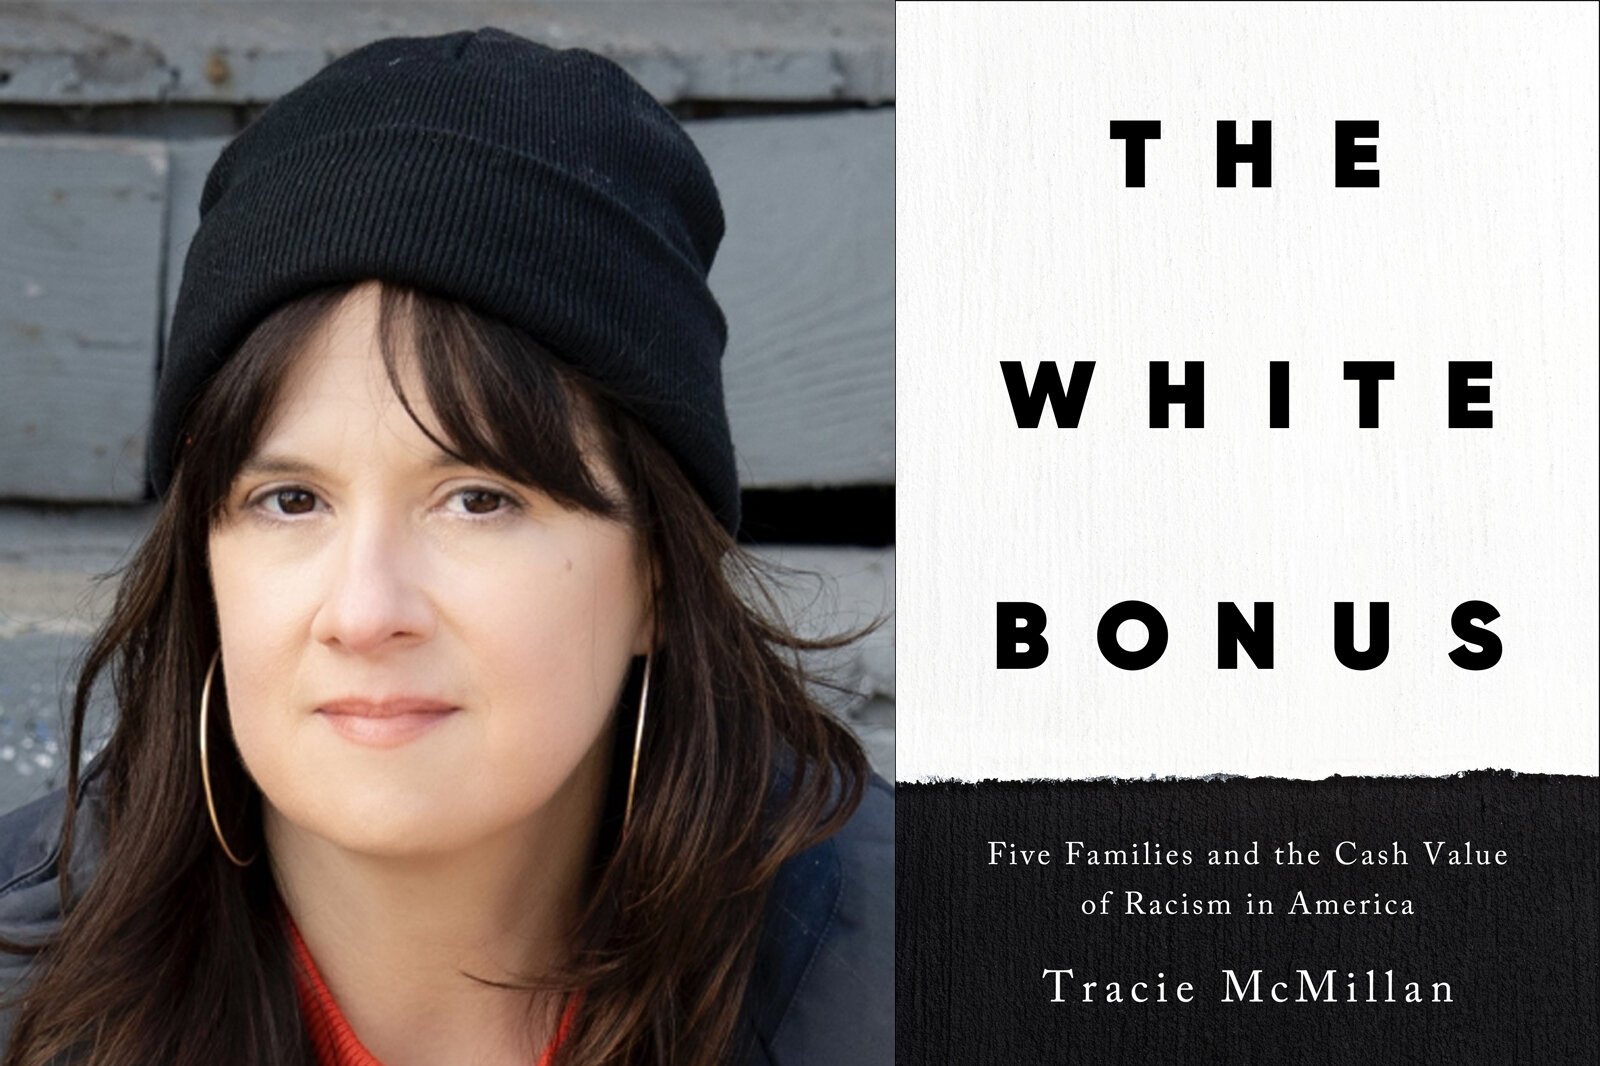 Tracie McMillan is the author of "The White Bonus."